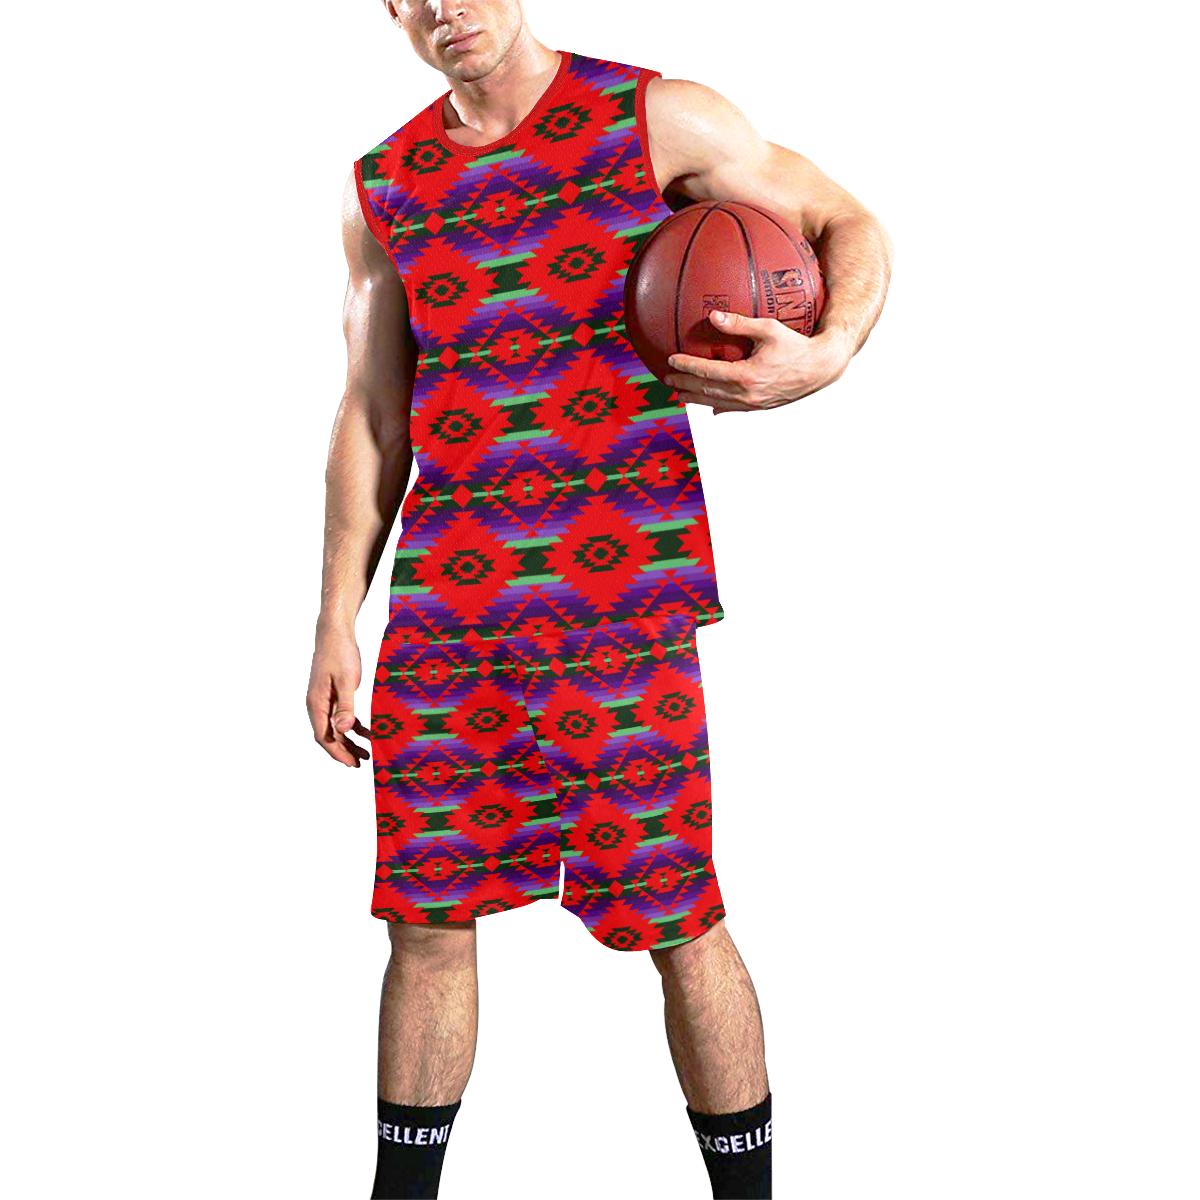 Cree Confederacy Chicken Dance All Over Print Basketball Uniform Basketball Uniform e-joyer 